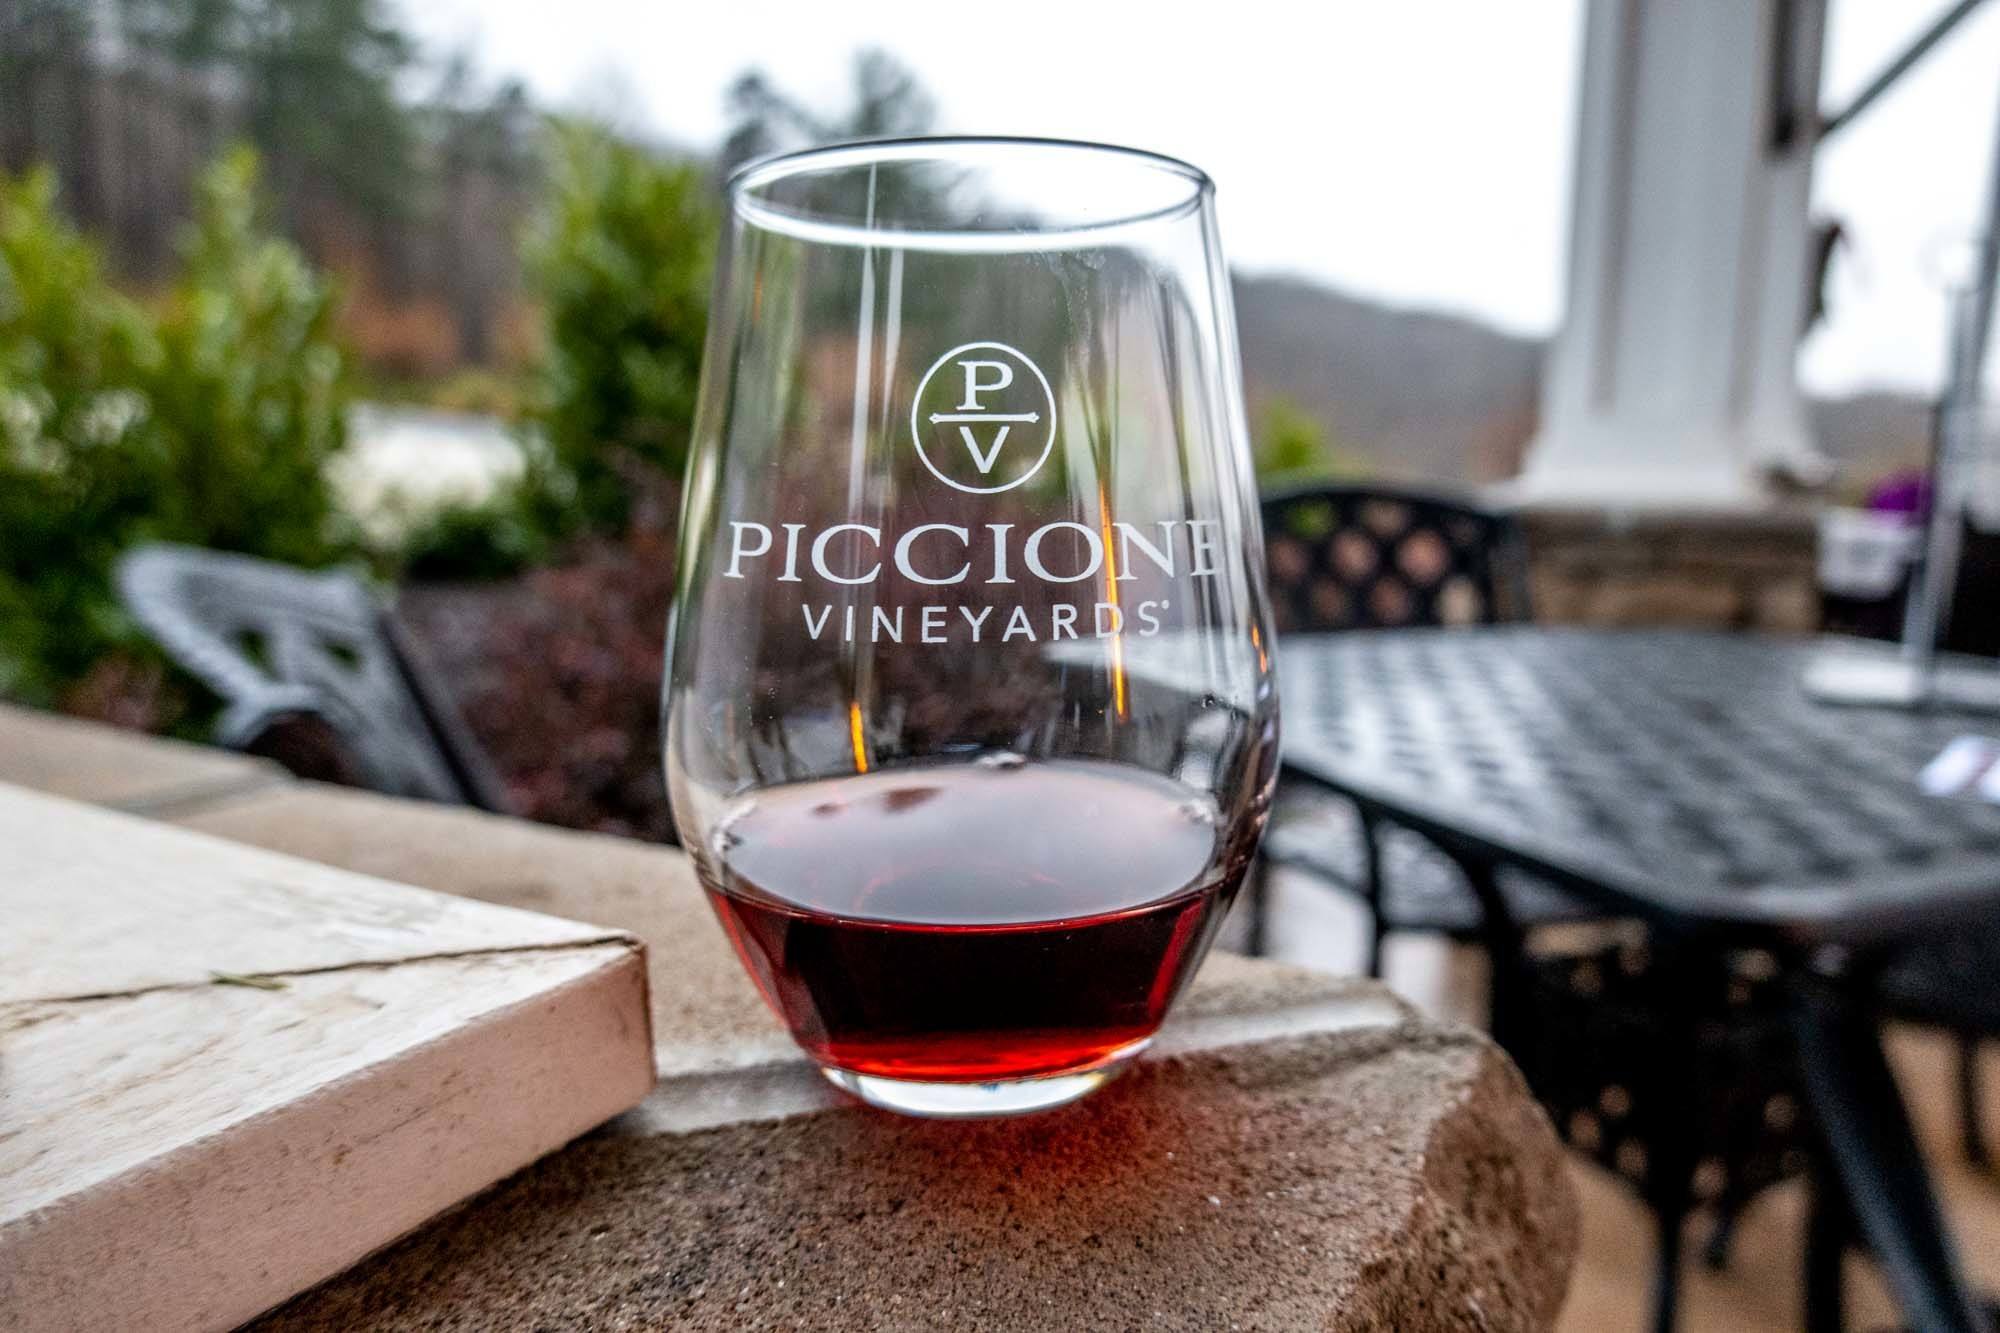 Wine glass labeled "Piccione Vineyards" 